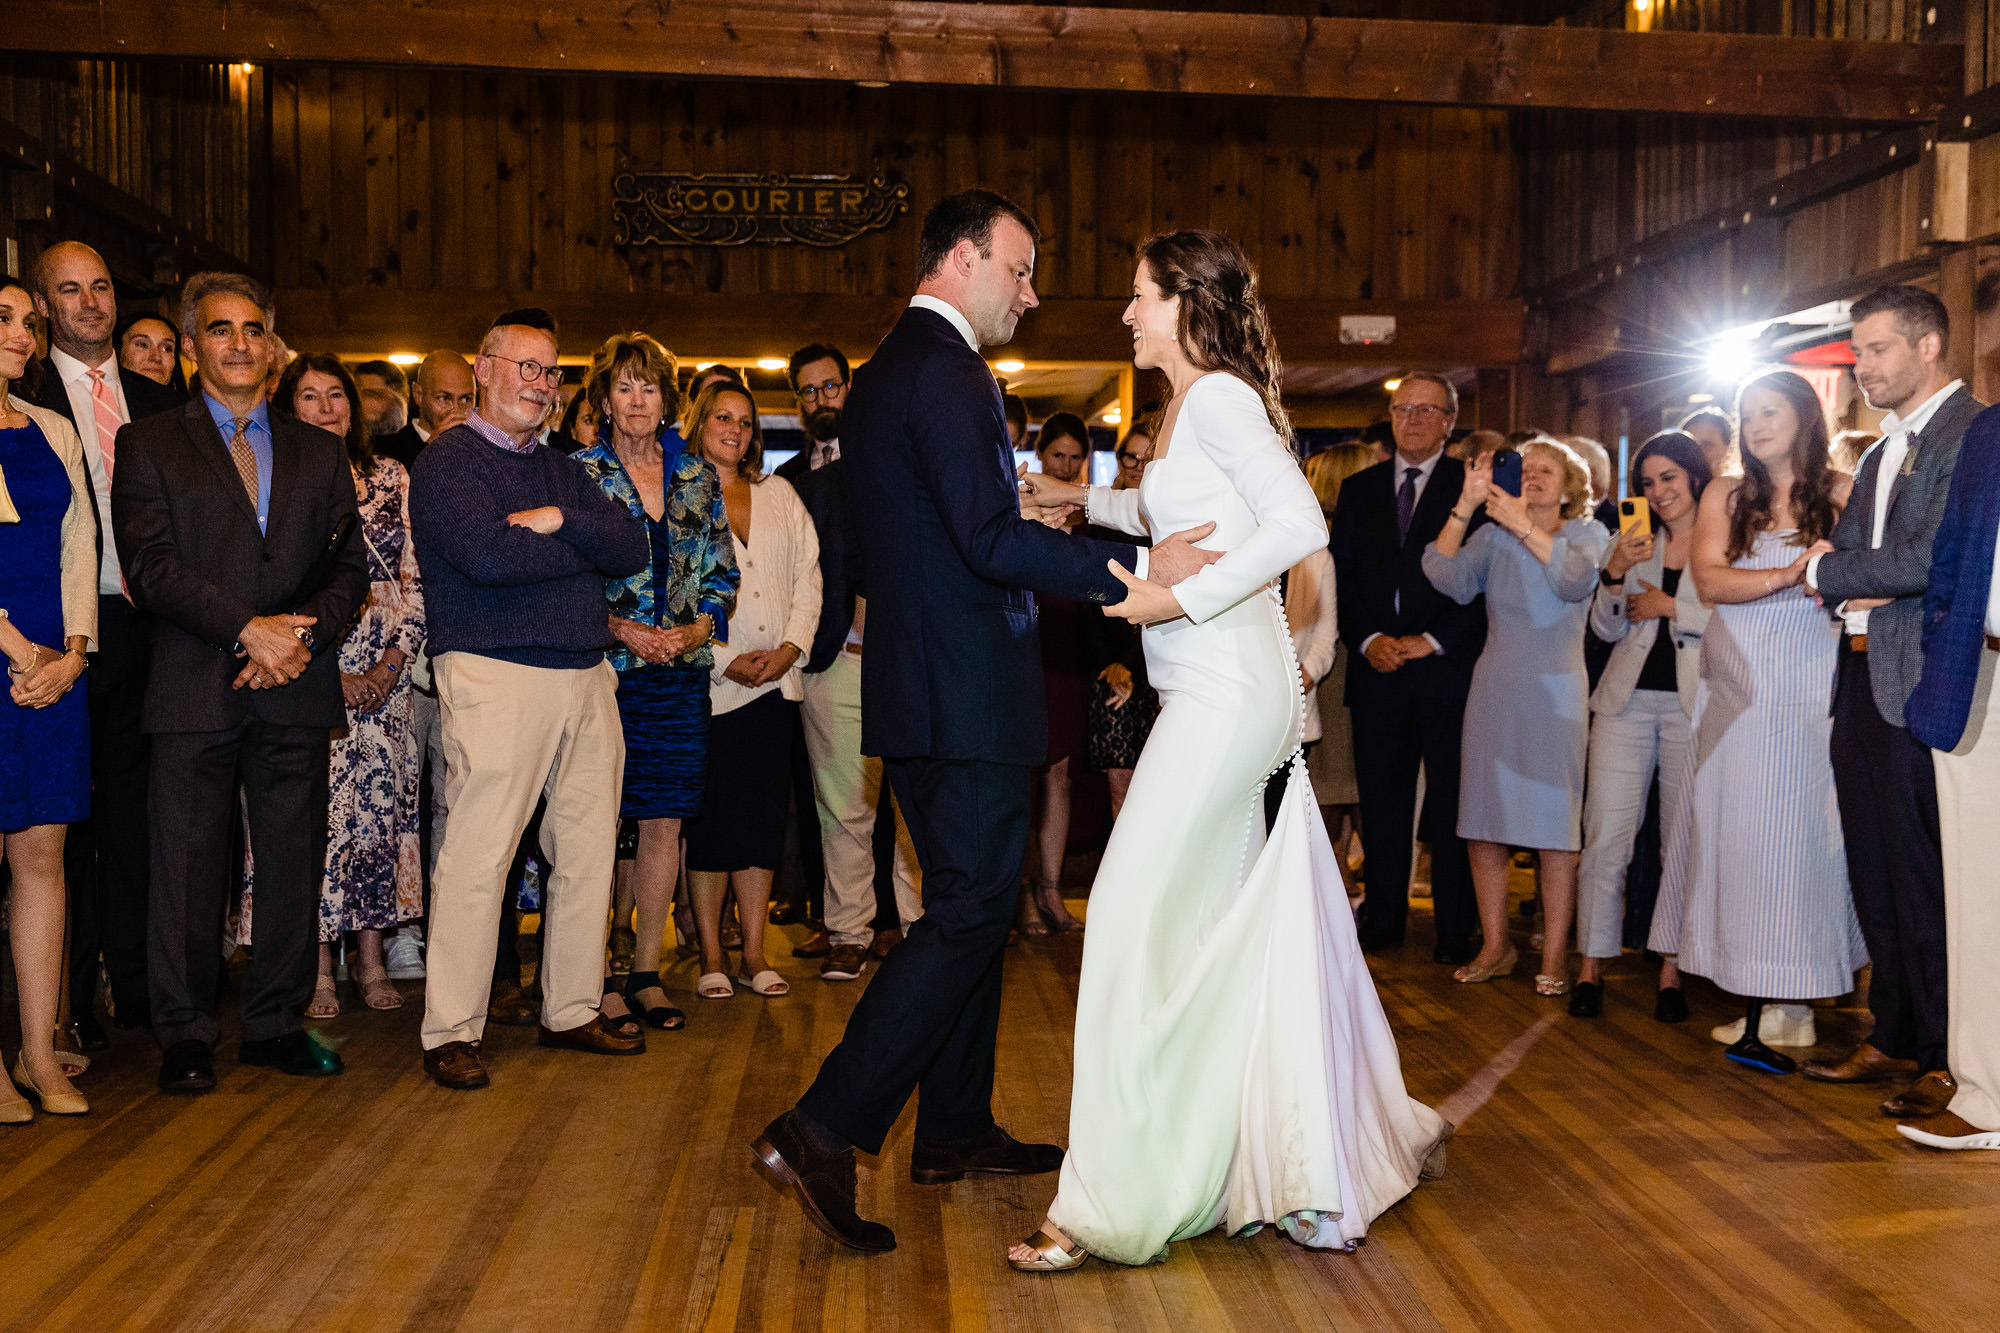 Formal dances at a wedding at Linekin Bay Resort in Maine